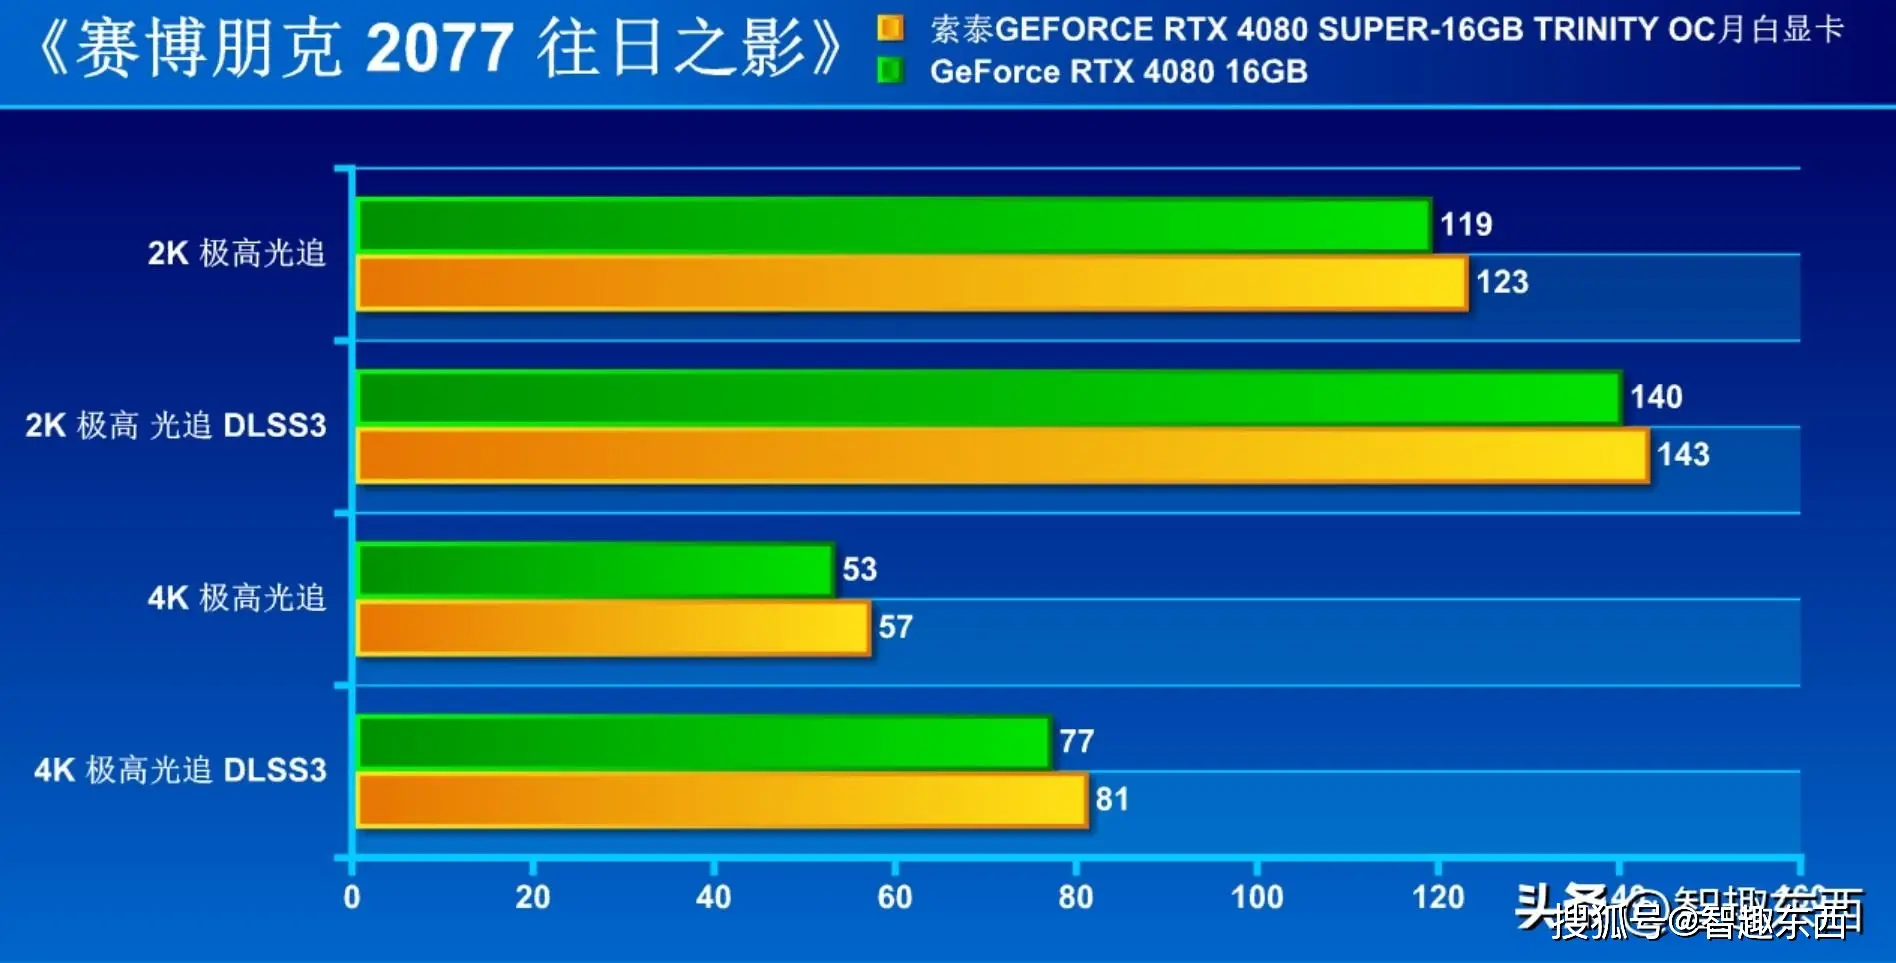 270X vs GTX760：性能、功耗、散热、价格全方位对比  第1张